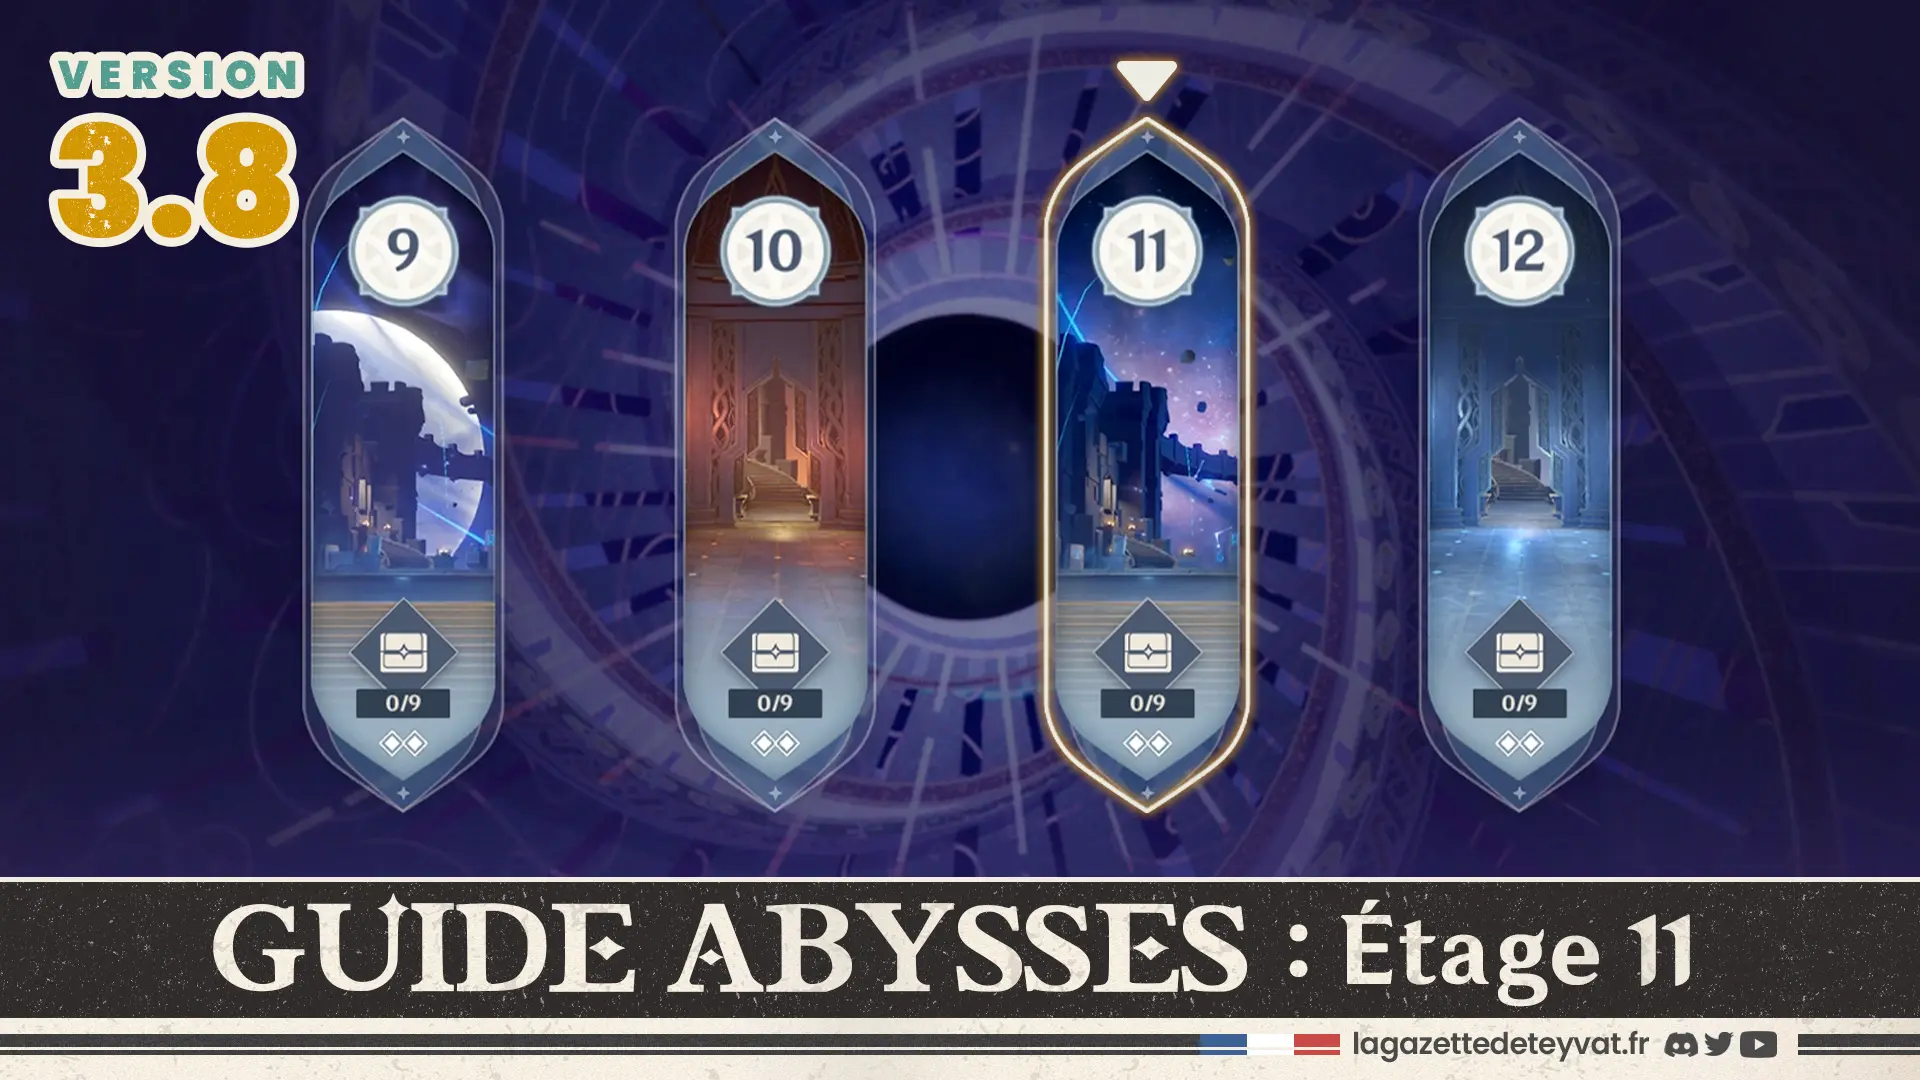 Abysses 3.8 étage 11